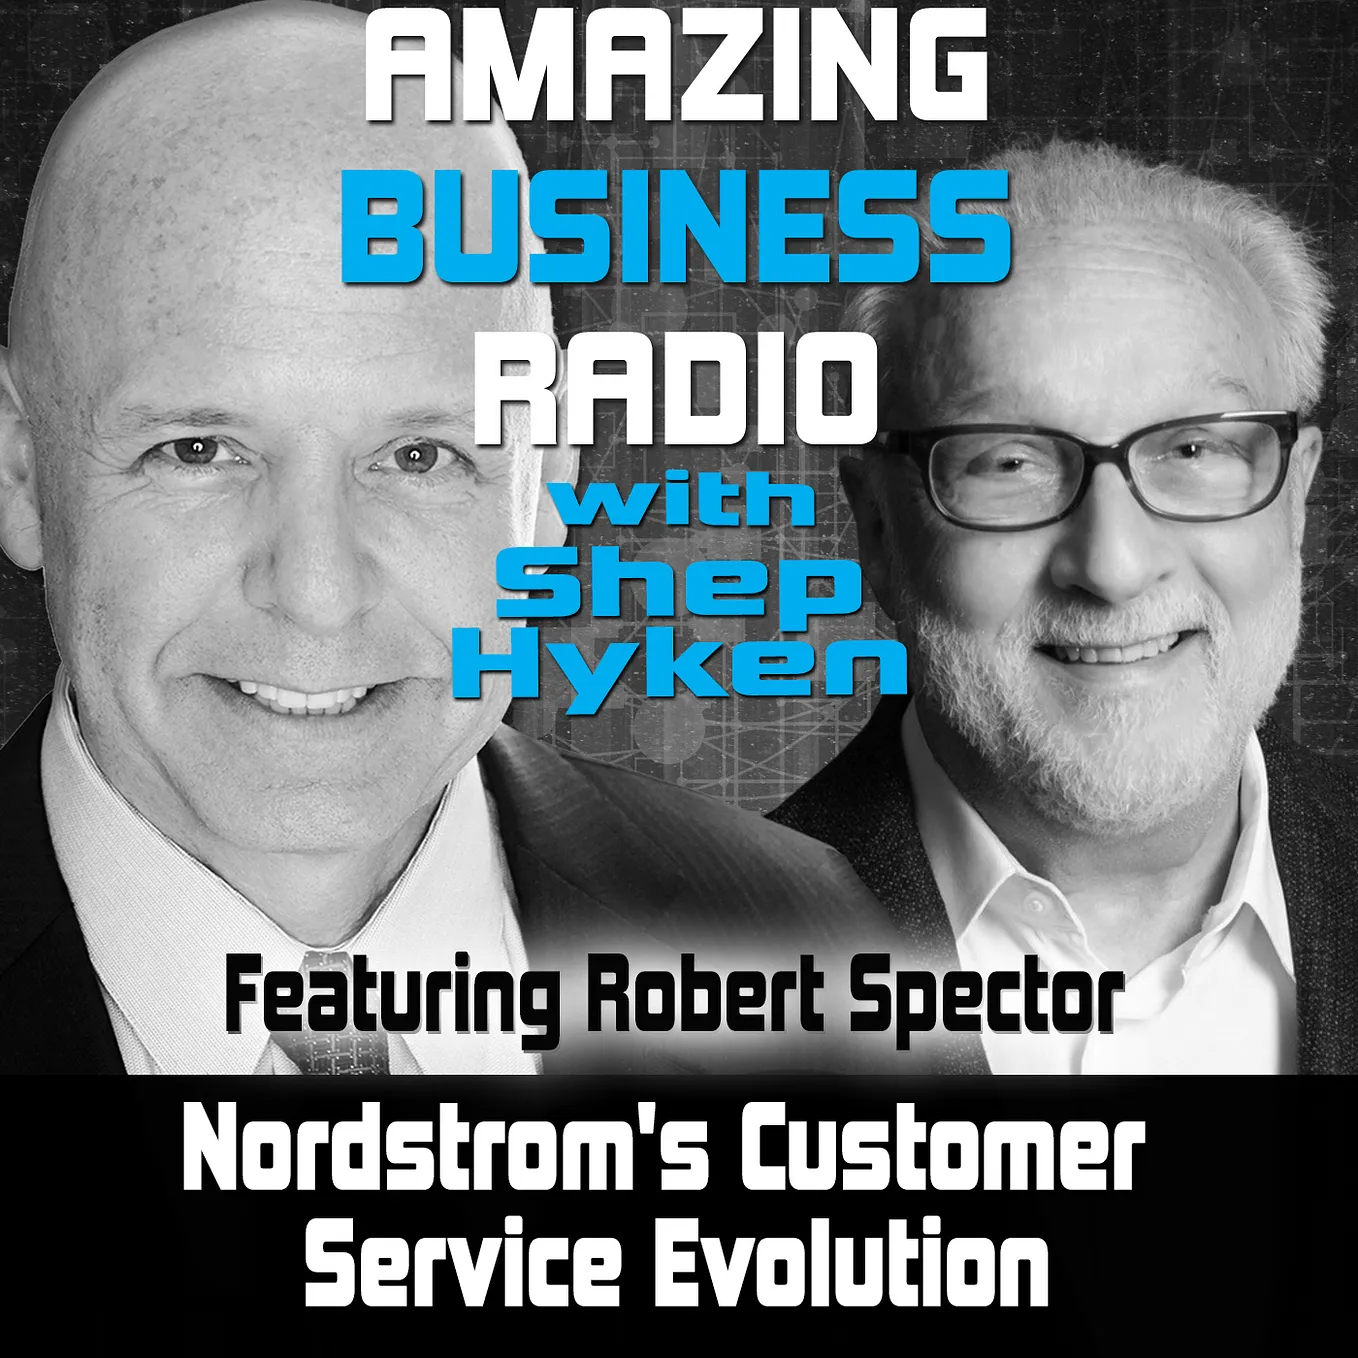 Nordstrom’s Customer Service Evolution with Robert Spector